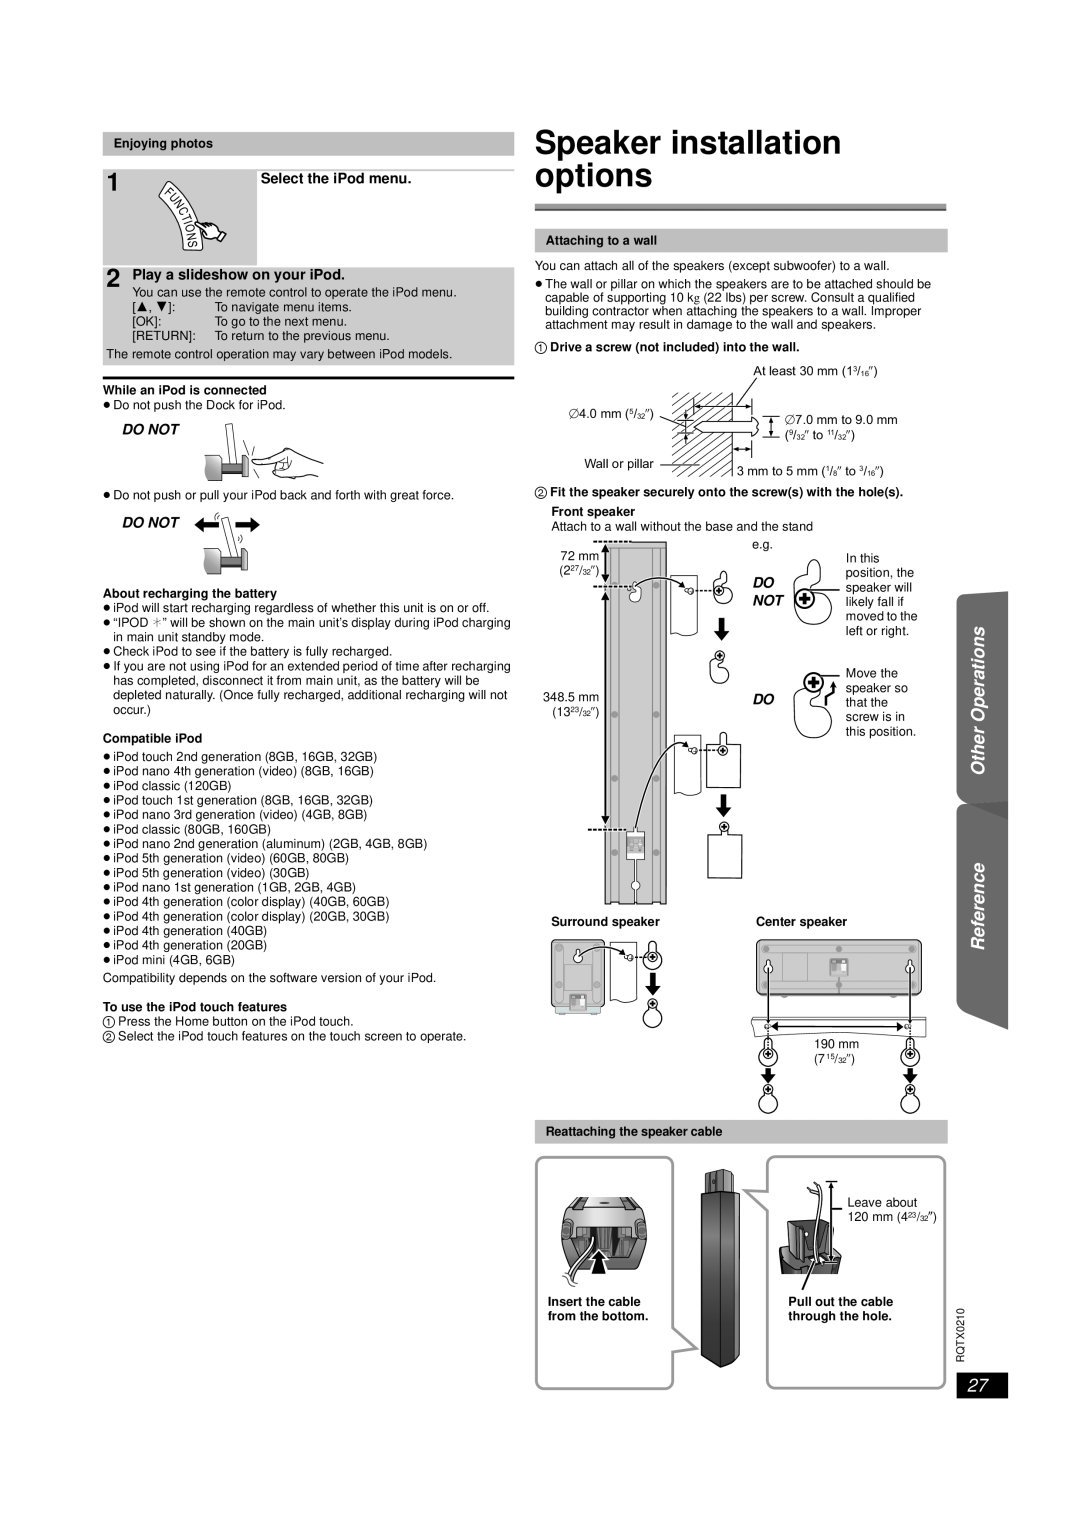 Panasonic SC-PT673, SC-PT670 manual Speaker installation options, Discs, Operations, Do Not, Started 